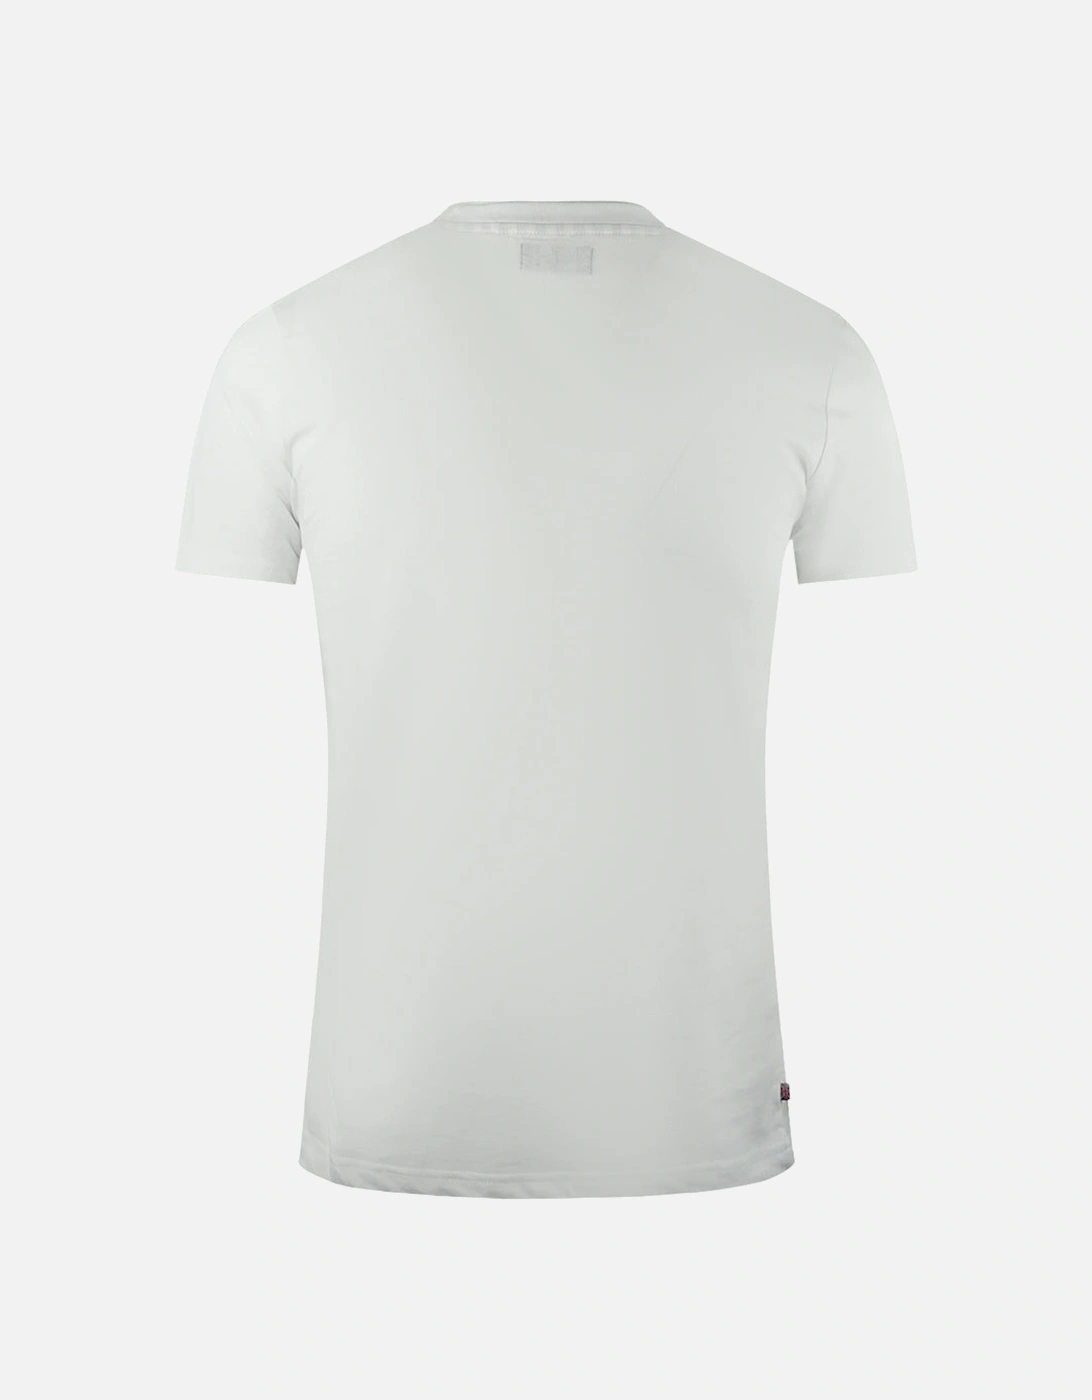 Large Bold London Aldis Brand Logo White T-Shirt